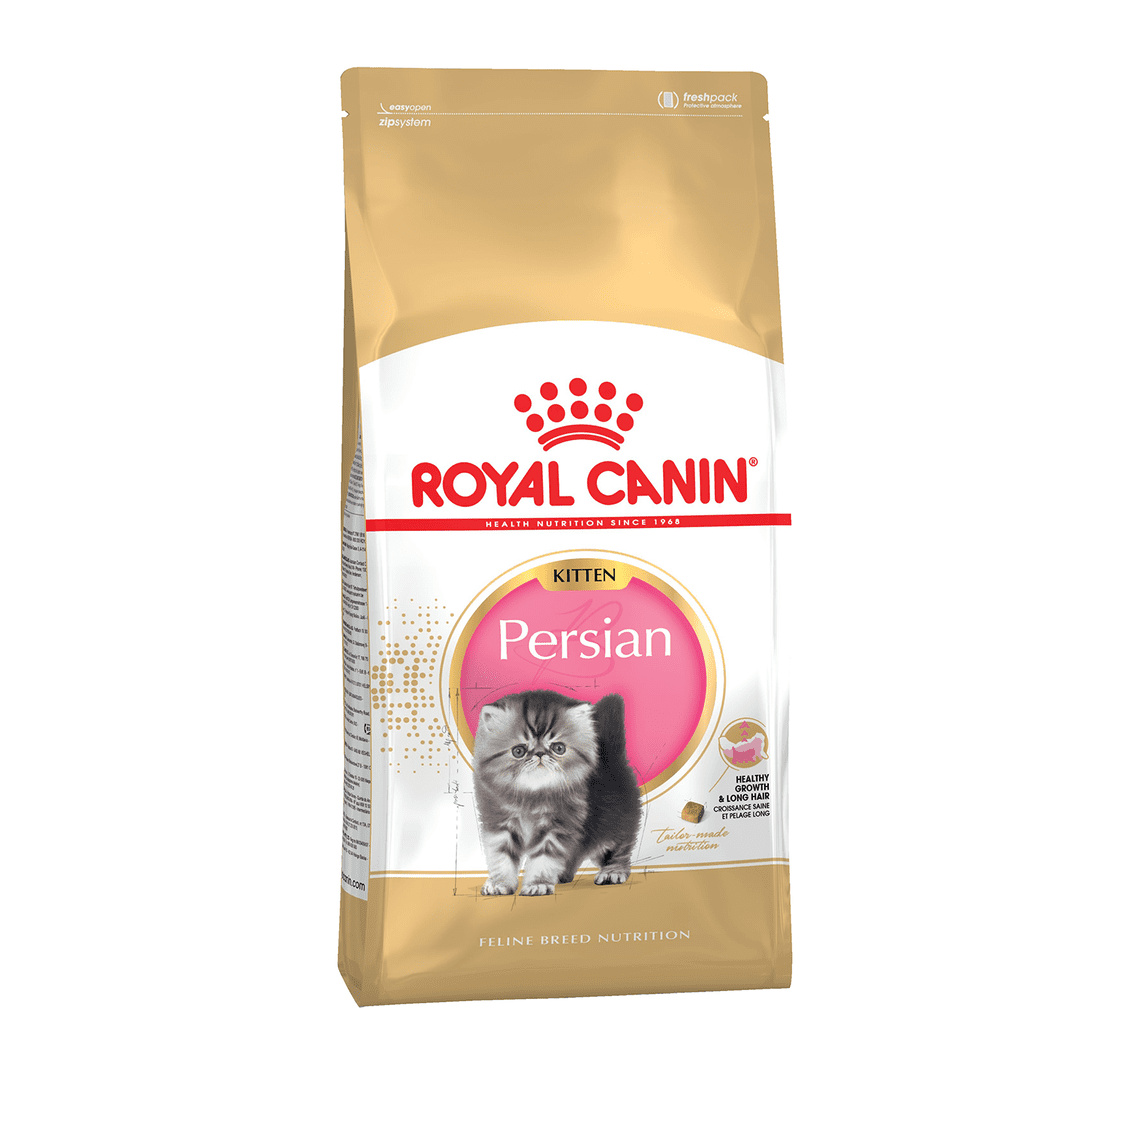 Royal Canin Корм Royal Canin для персидских котят 4-12 мес. (10 кг) royal canin корм royal canin для персидских котят 4 12 мес 10 кг